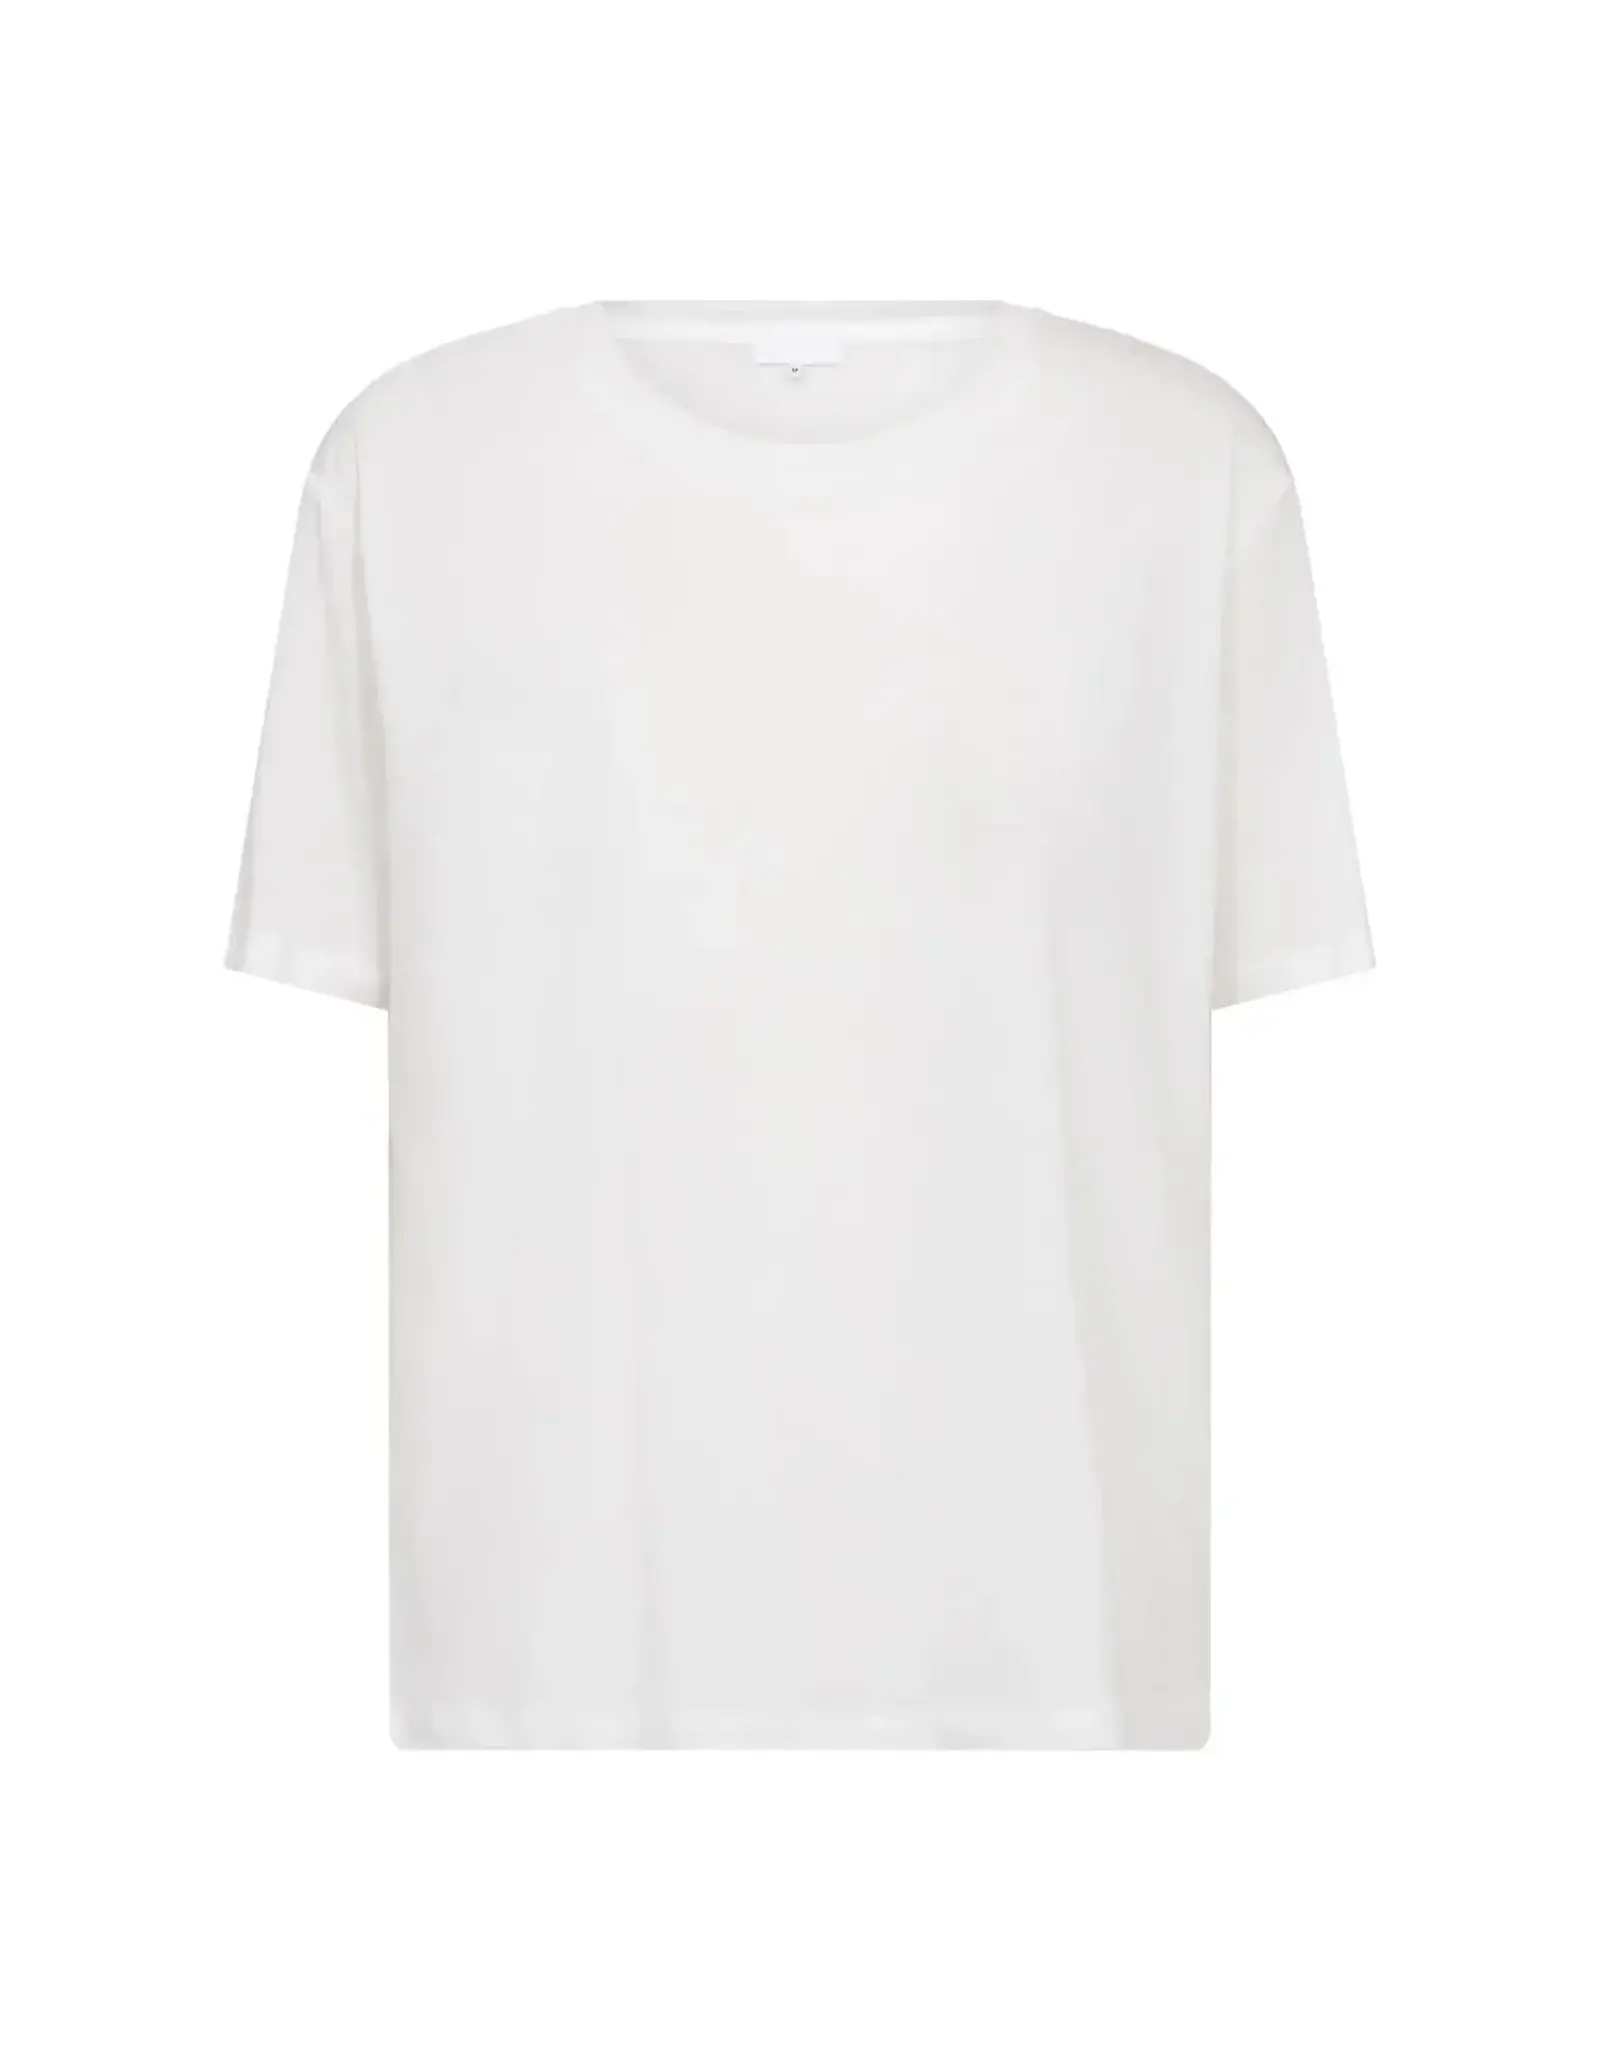 Levete Room Fred 1 T-Shirt White